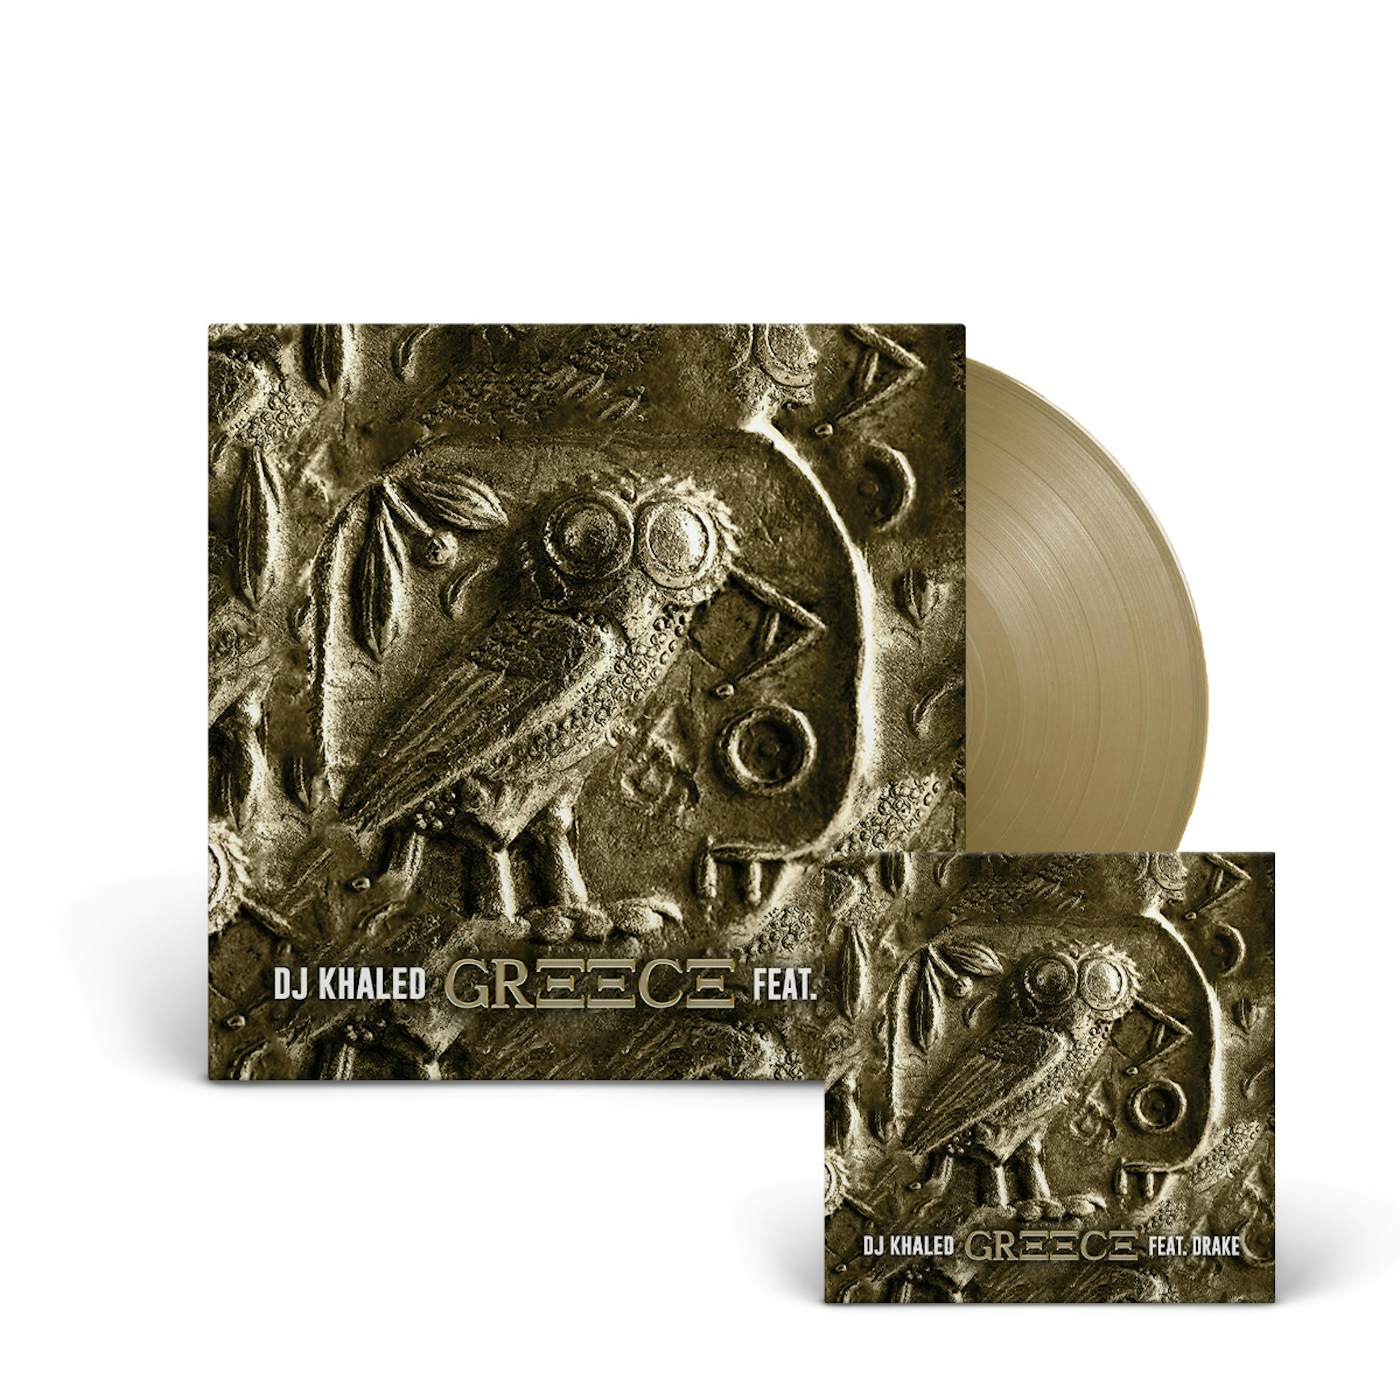 DJ Khaled “GREECE”  7” Gold Single LP + Digital Download (Vinyl)